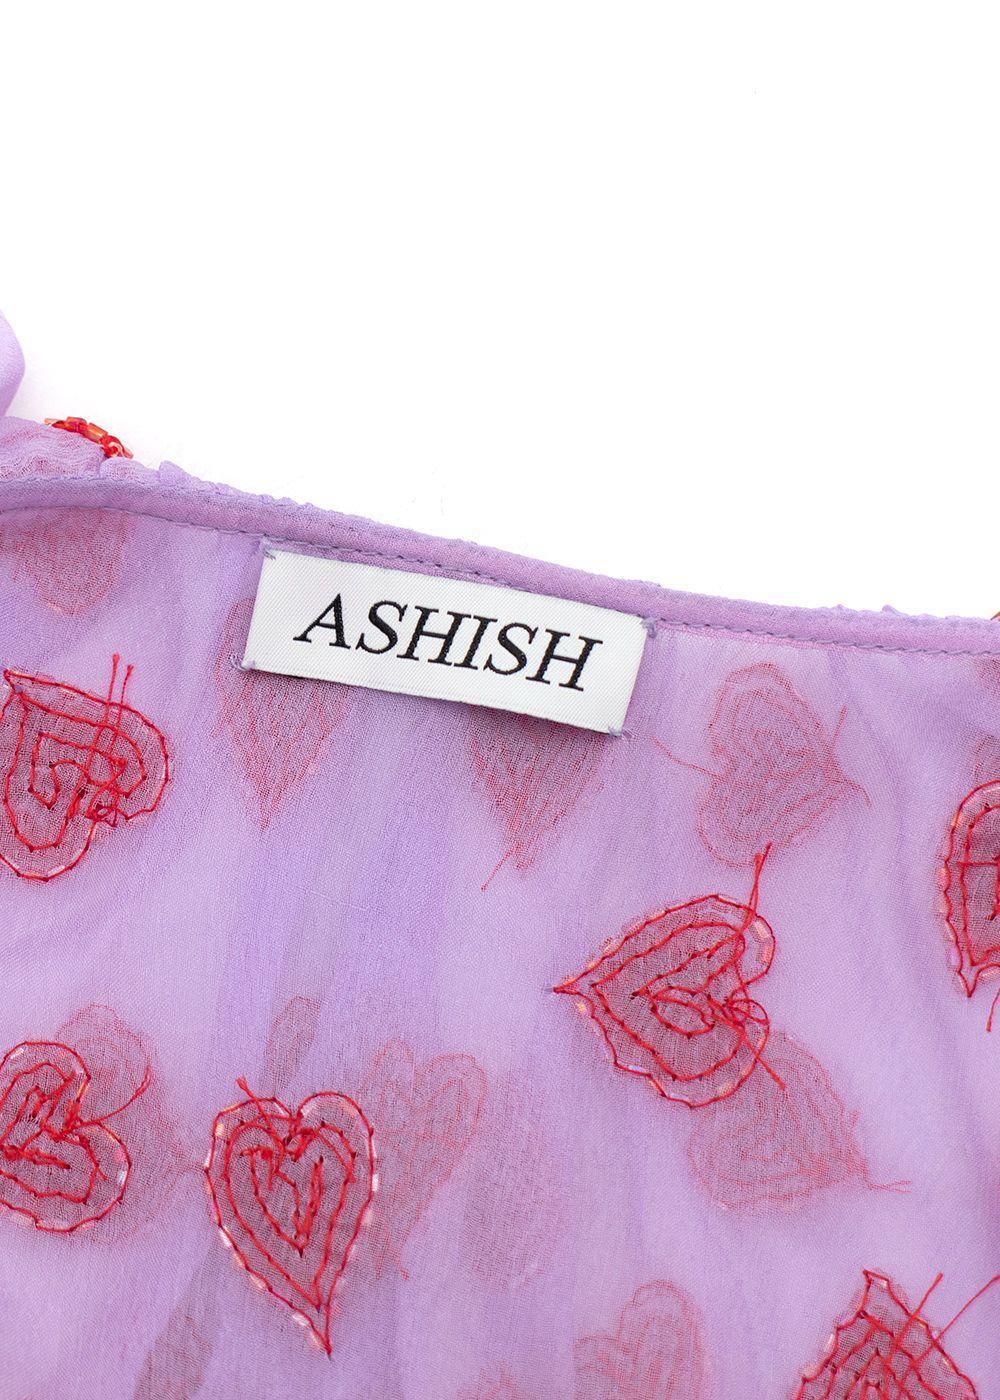 ashish pink bow dress